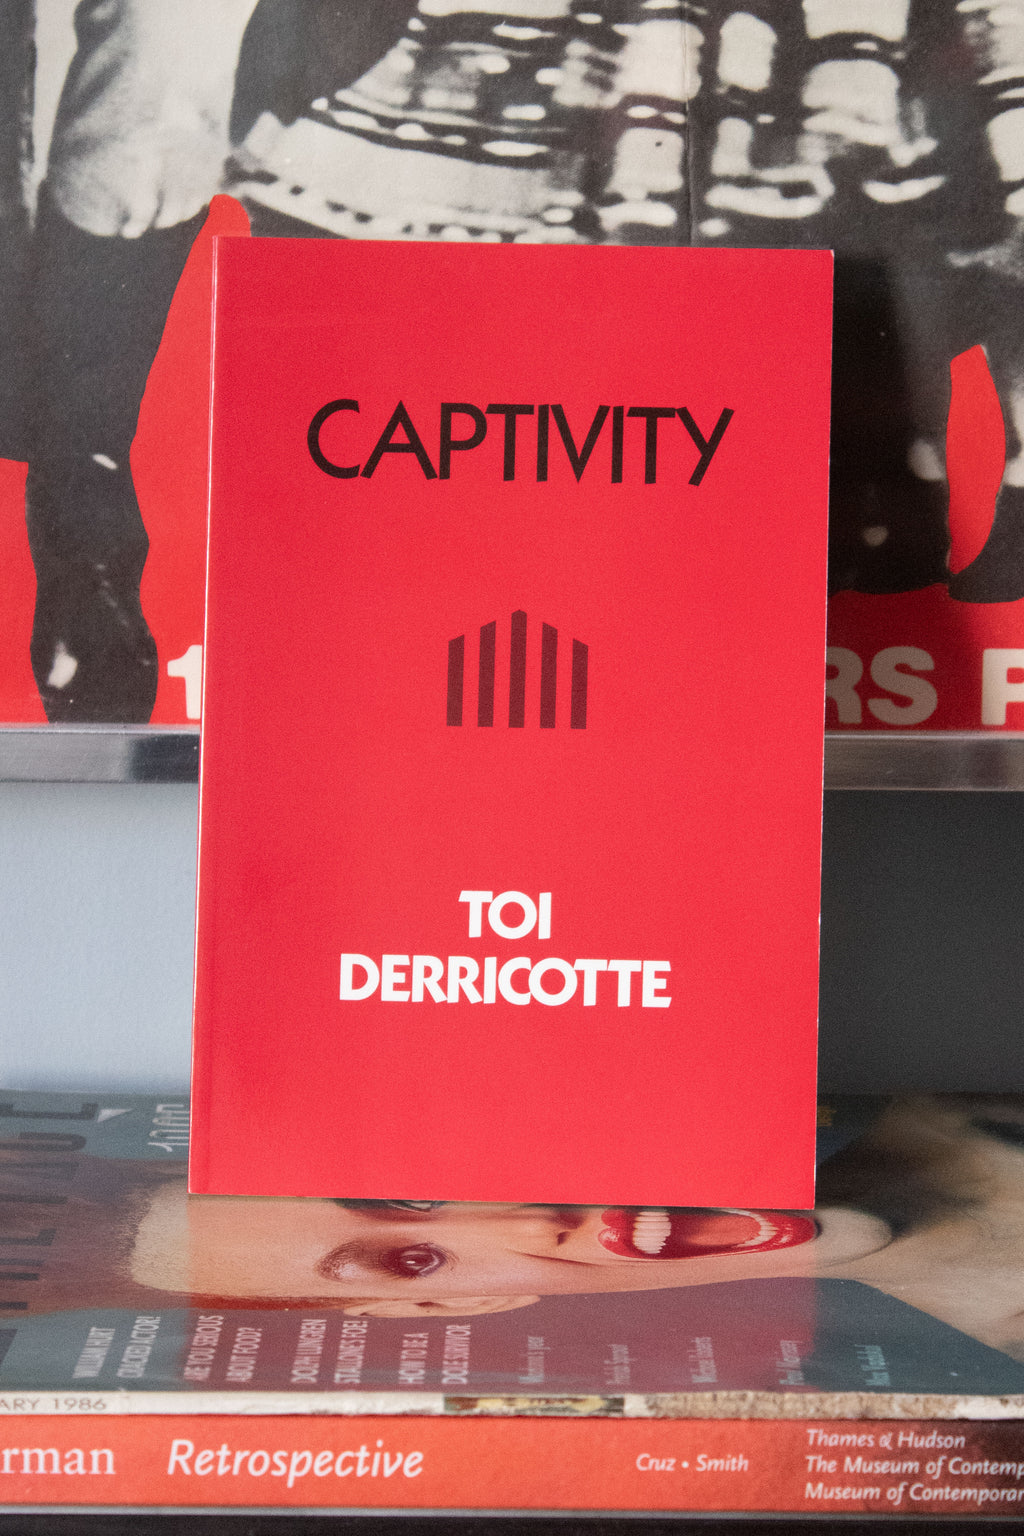 "Captivity" by Toi Derricotte